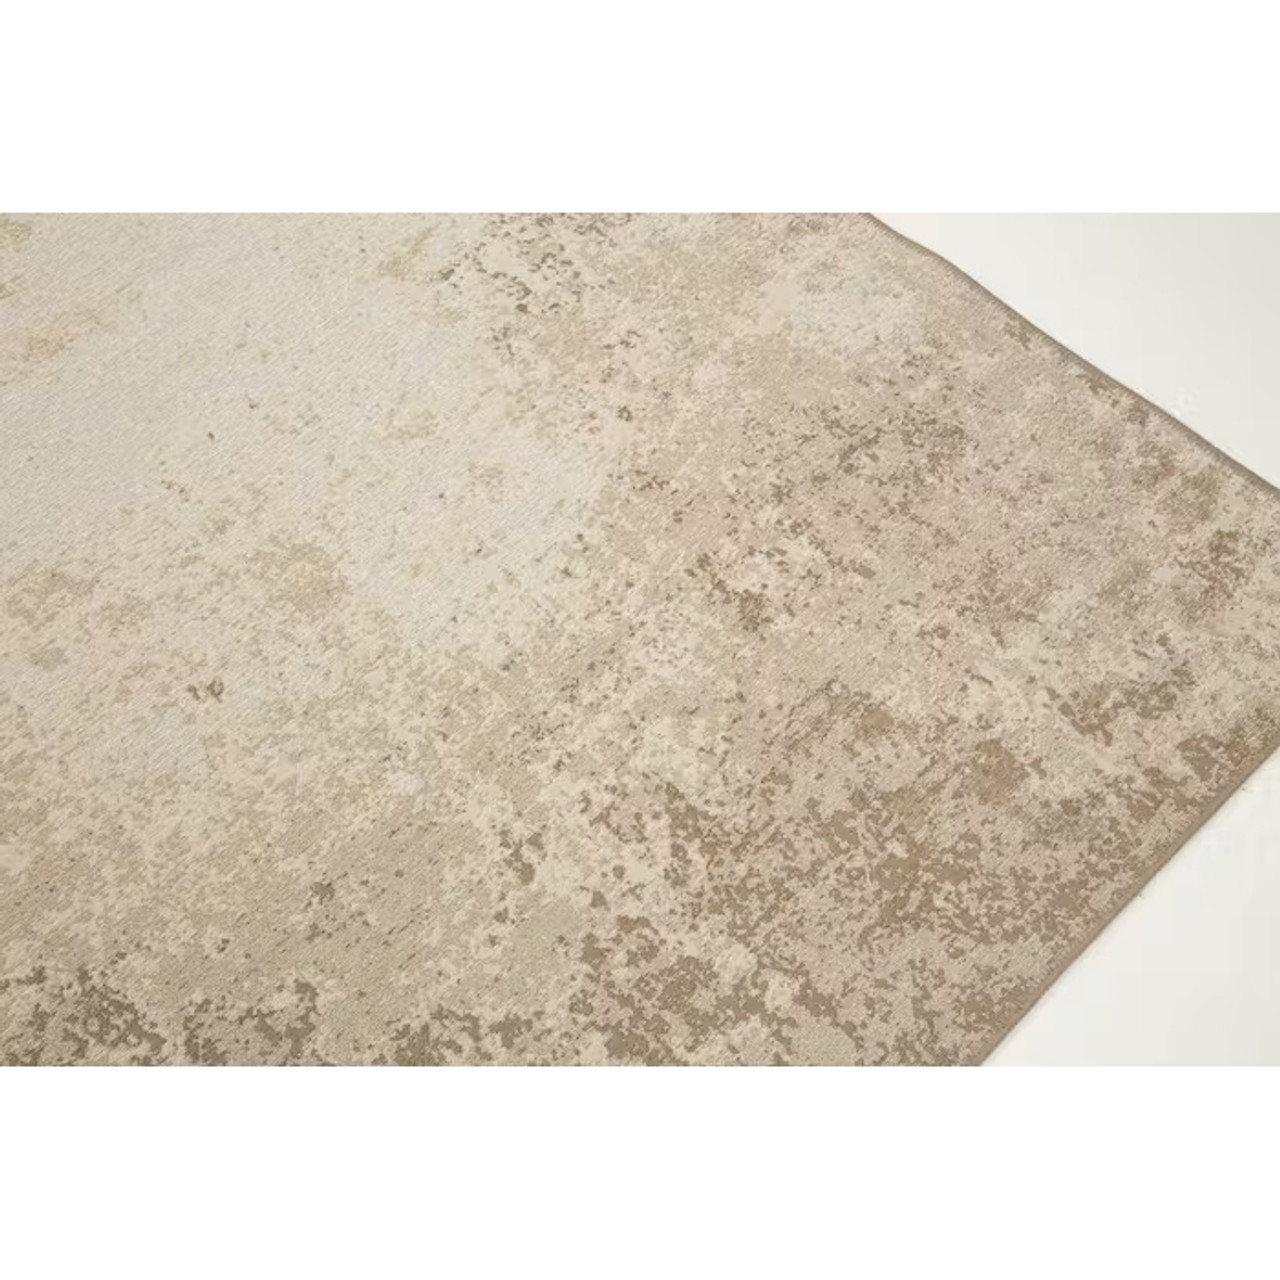 Aken Carpet 250x350 Off-White